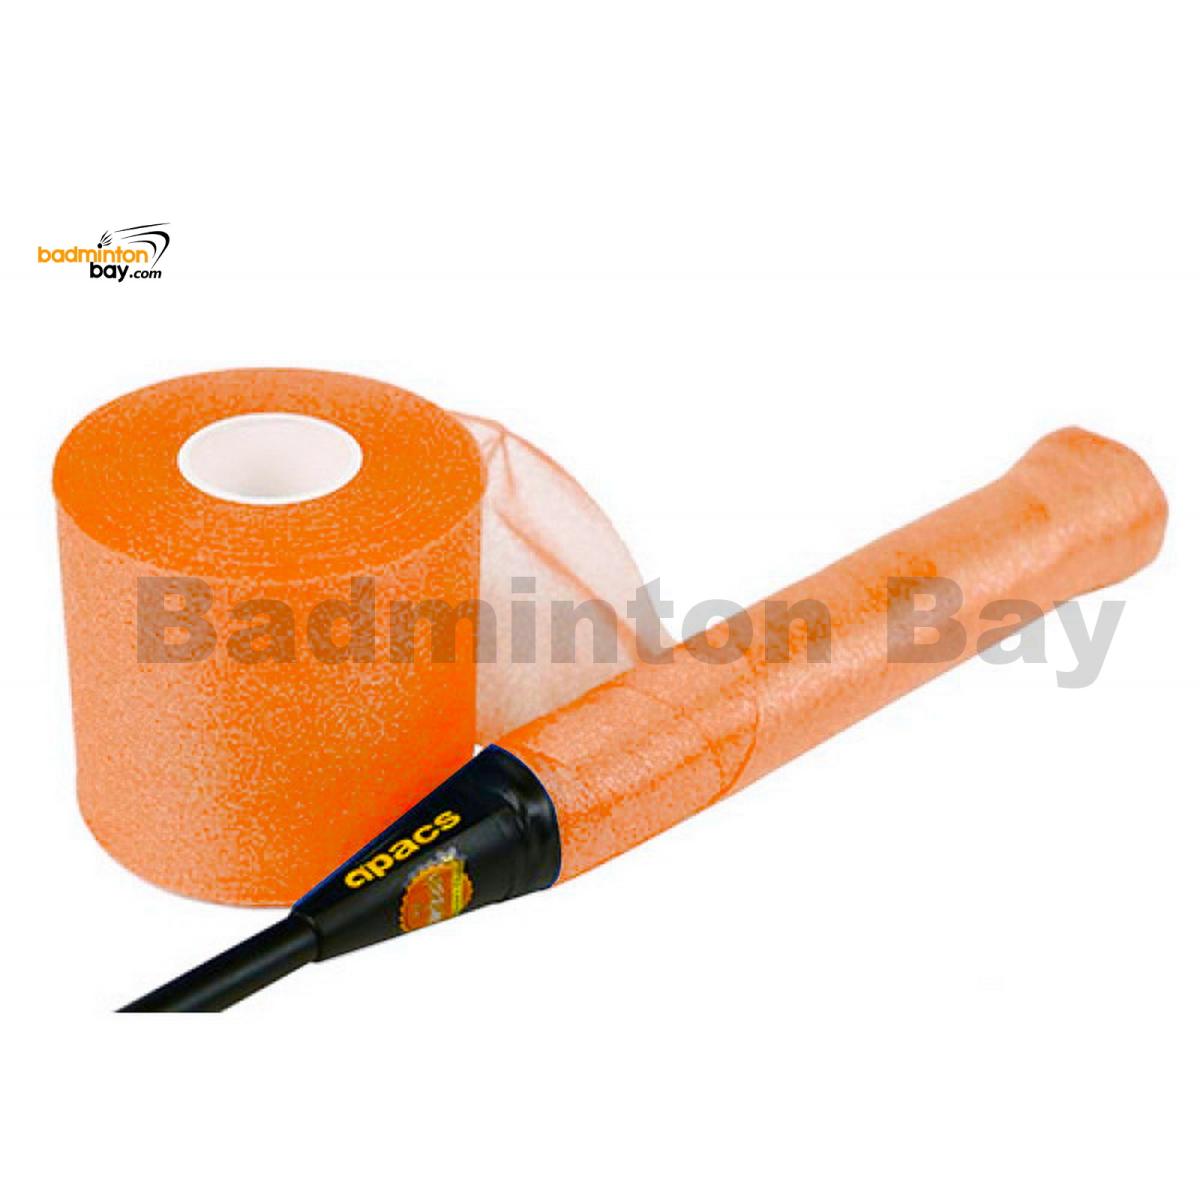 Apacs AP510 Sports Wrap Foam Grip 27m (1 roll) for Badminton